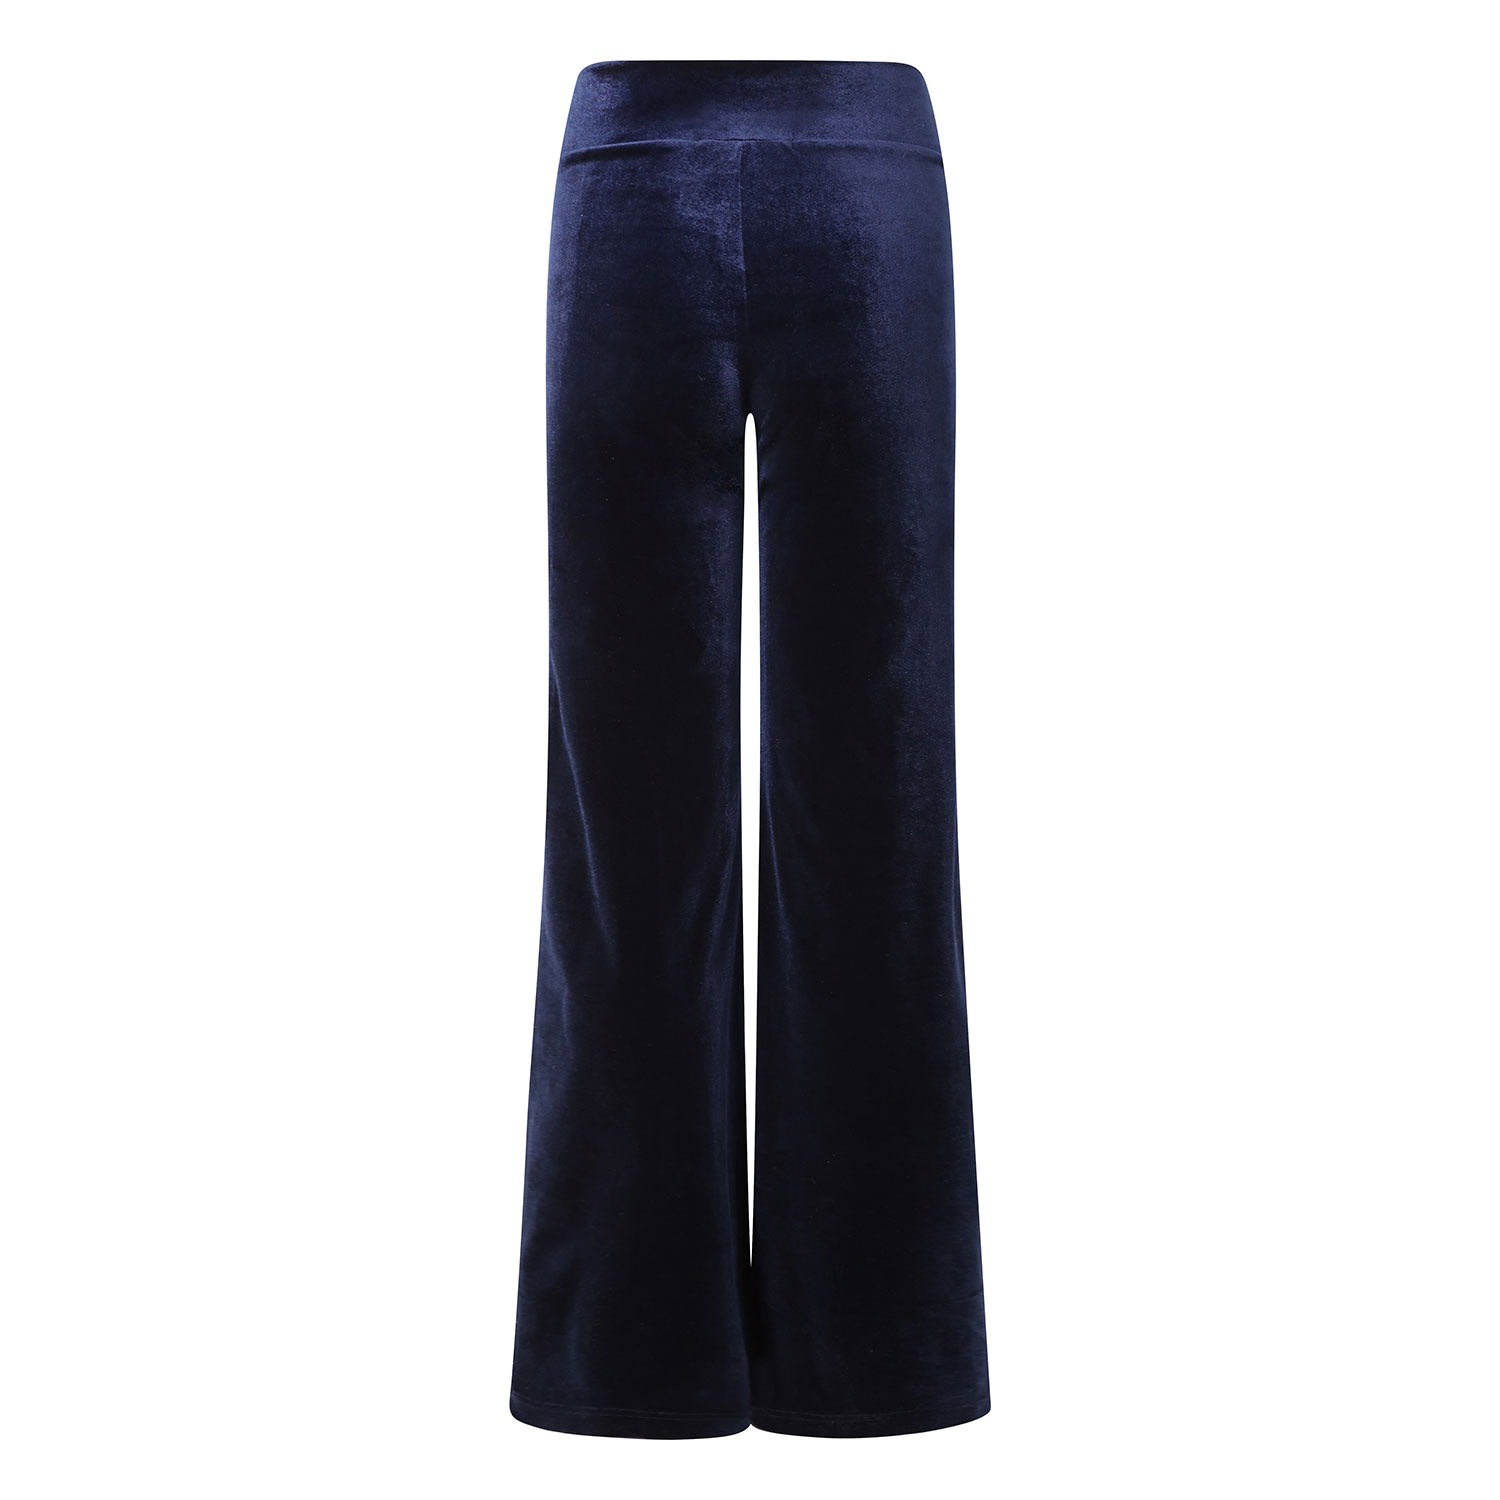 Beatrice Von Tresckow Women's Blue Velvet Wide Flare Trousers - Navy